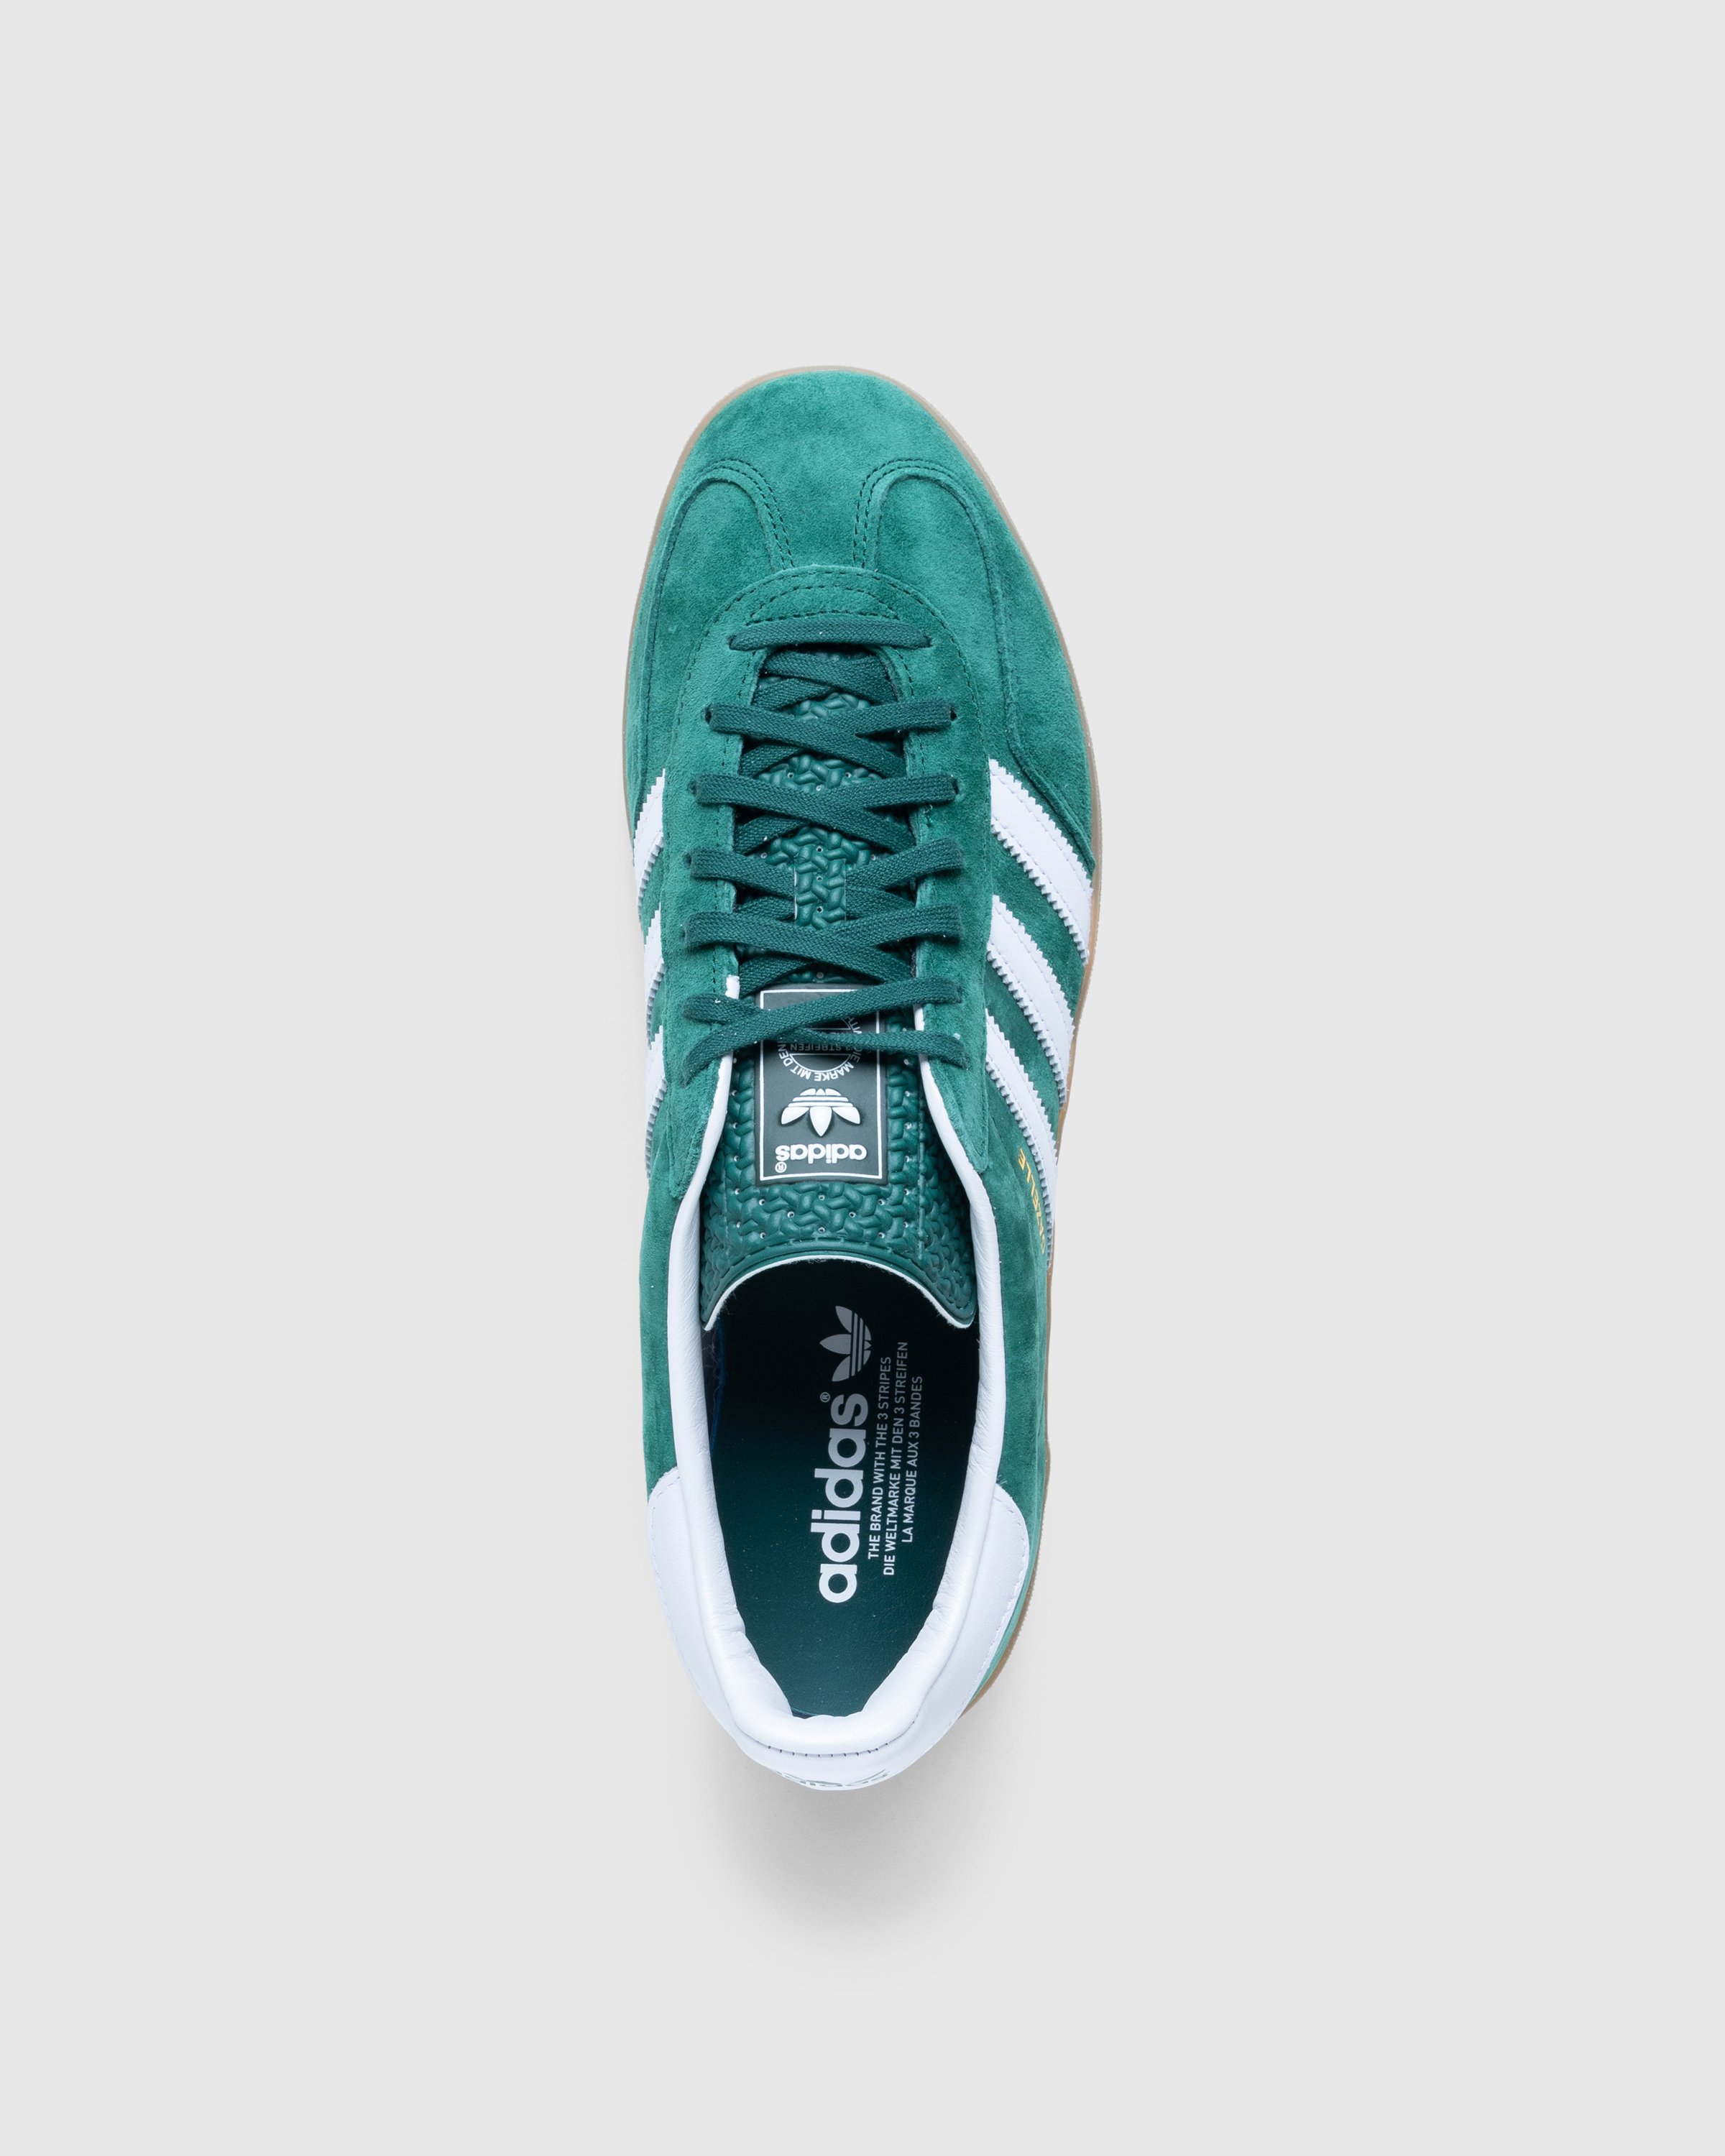 Adidas - Gazelle Indoor Collegiate Green - Footwear - Green - Image 5